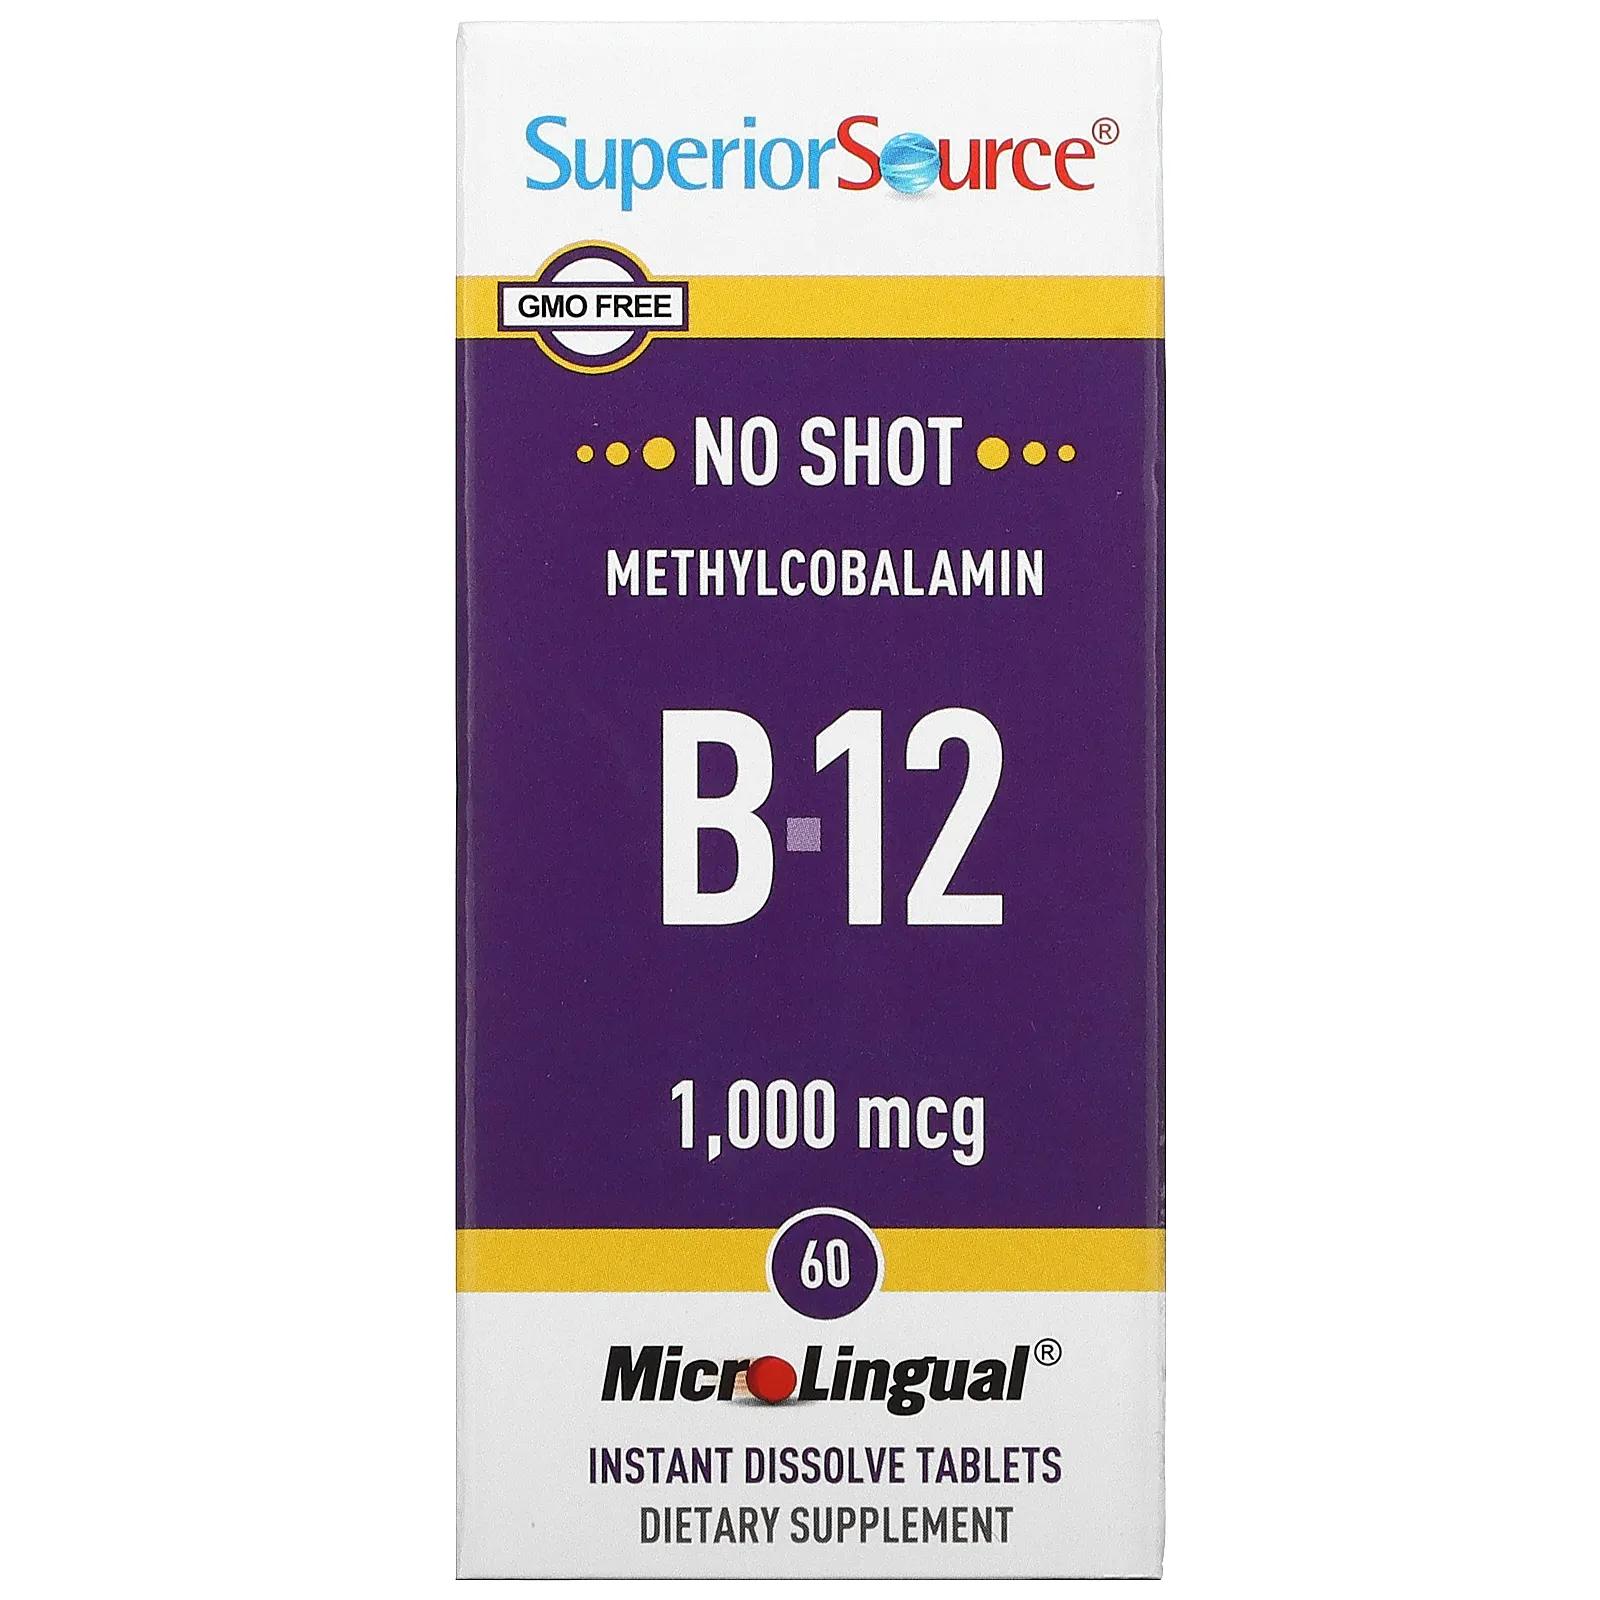 Superior Source Methylcobalamin B-12 1000 mcg 60 MicroLingual Instant Dissolve Tablets superior source sleep